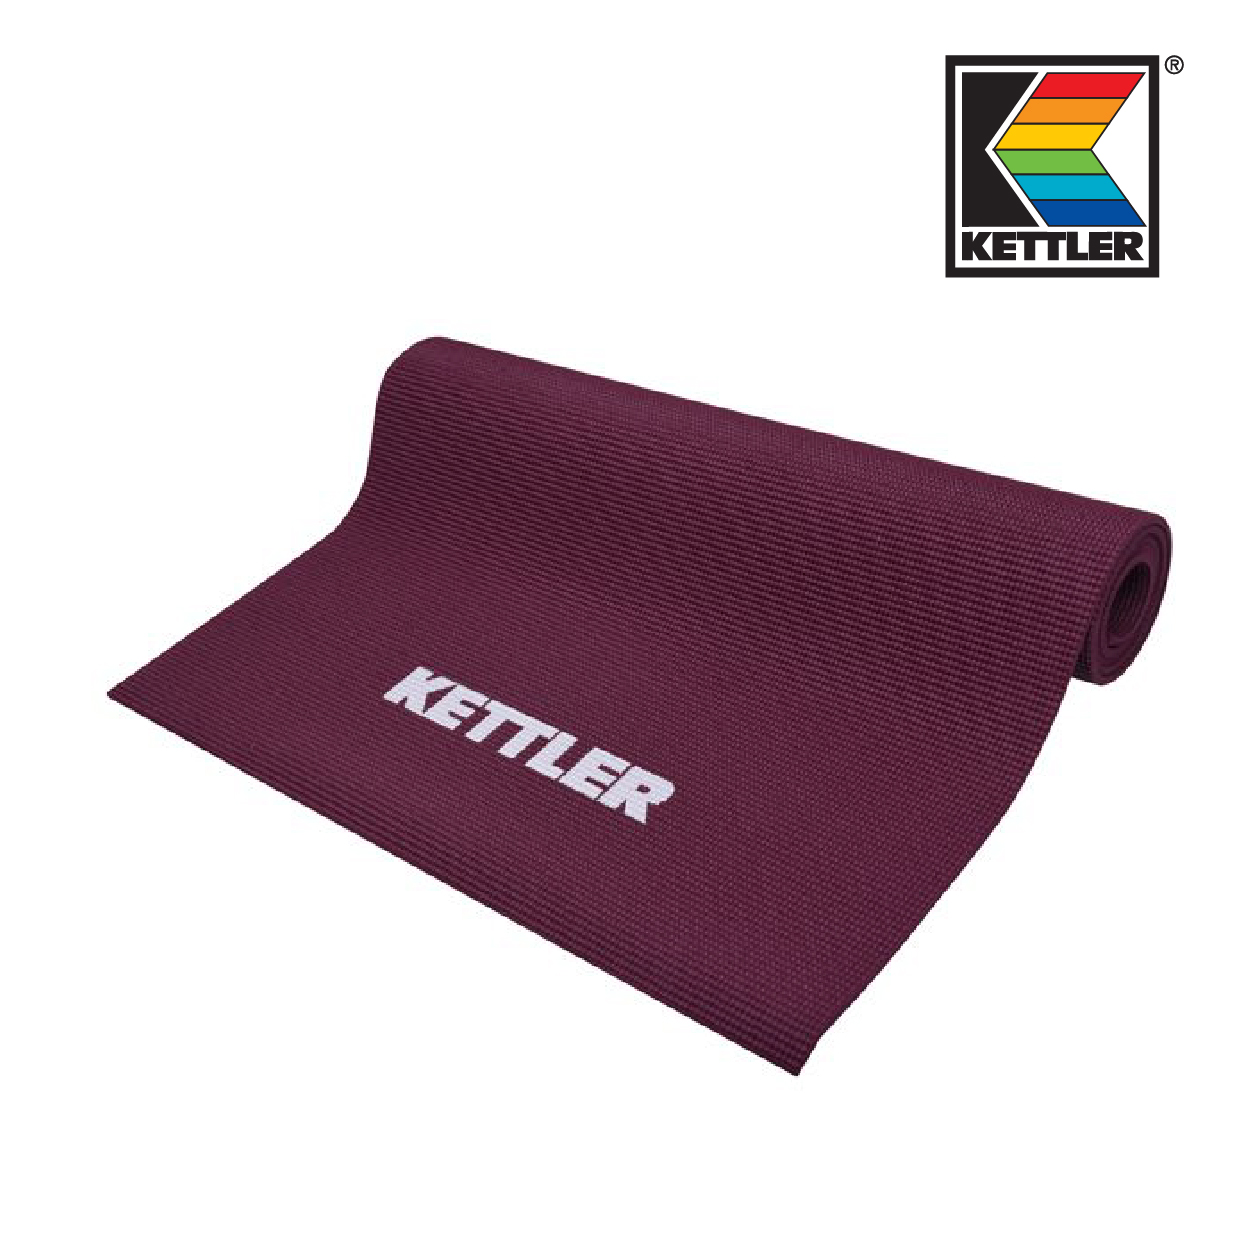 Kettler KAL 102000 Yoga - 6.0mm with Mesh (Maroon) | Singapore